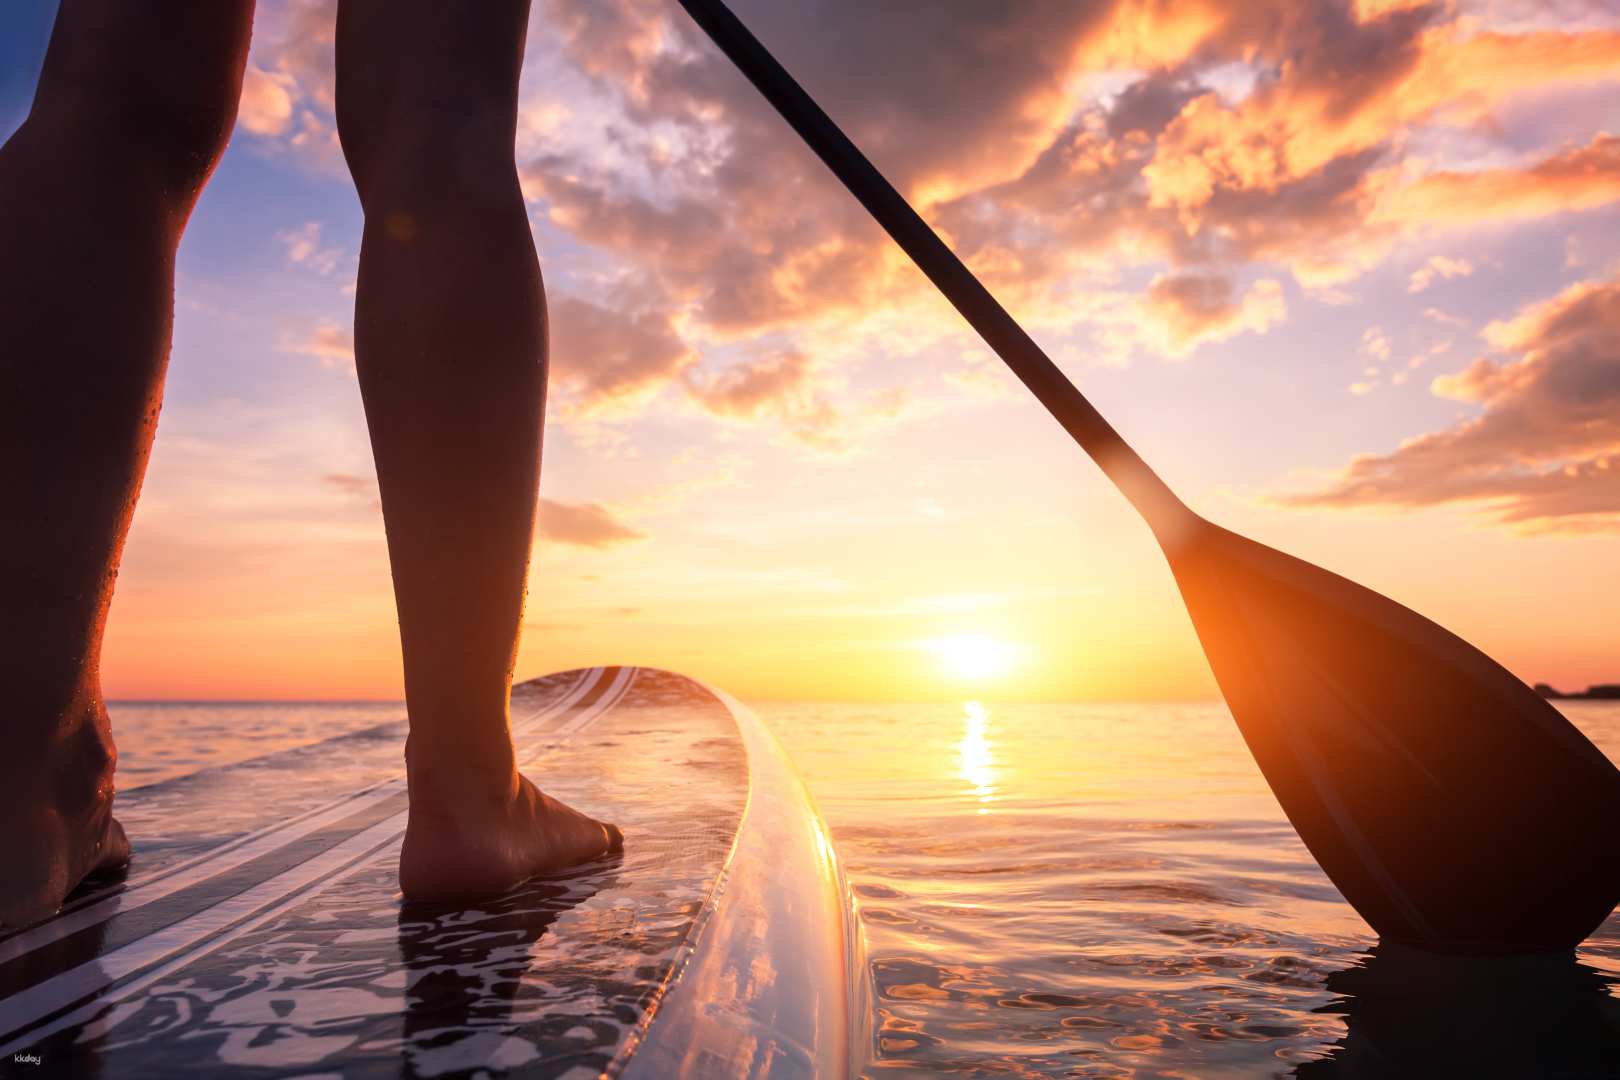 Tanjung Aru Sunrise Stand Up Paddle Board (SUP) + Kiulu White Water Rafting Half Day Tour with Return Transfer & Lunch Buffet | Kota Kinabalu, Sabah